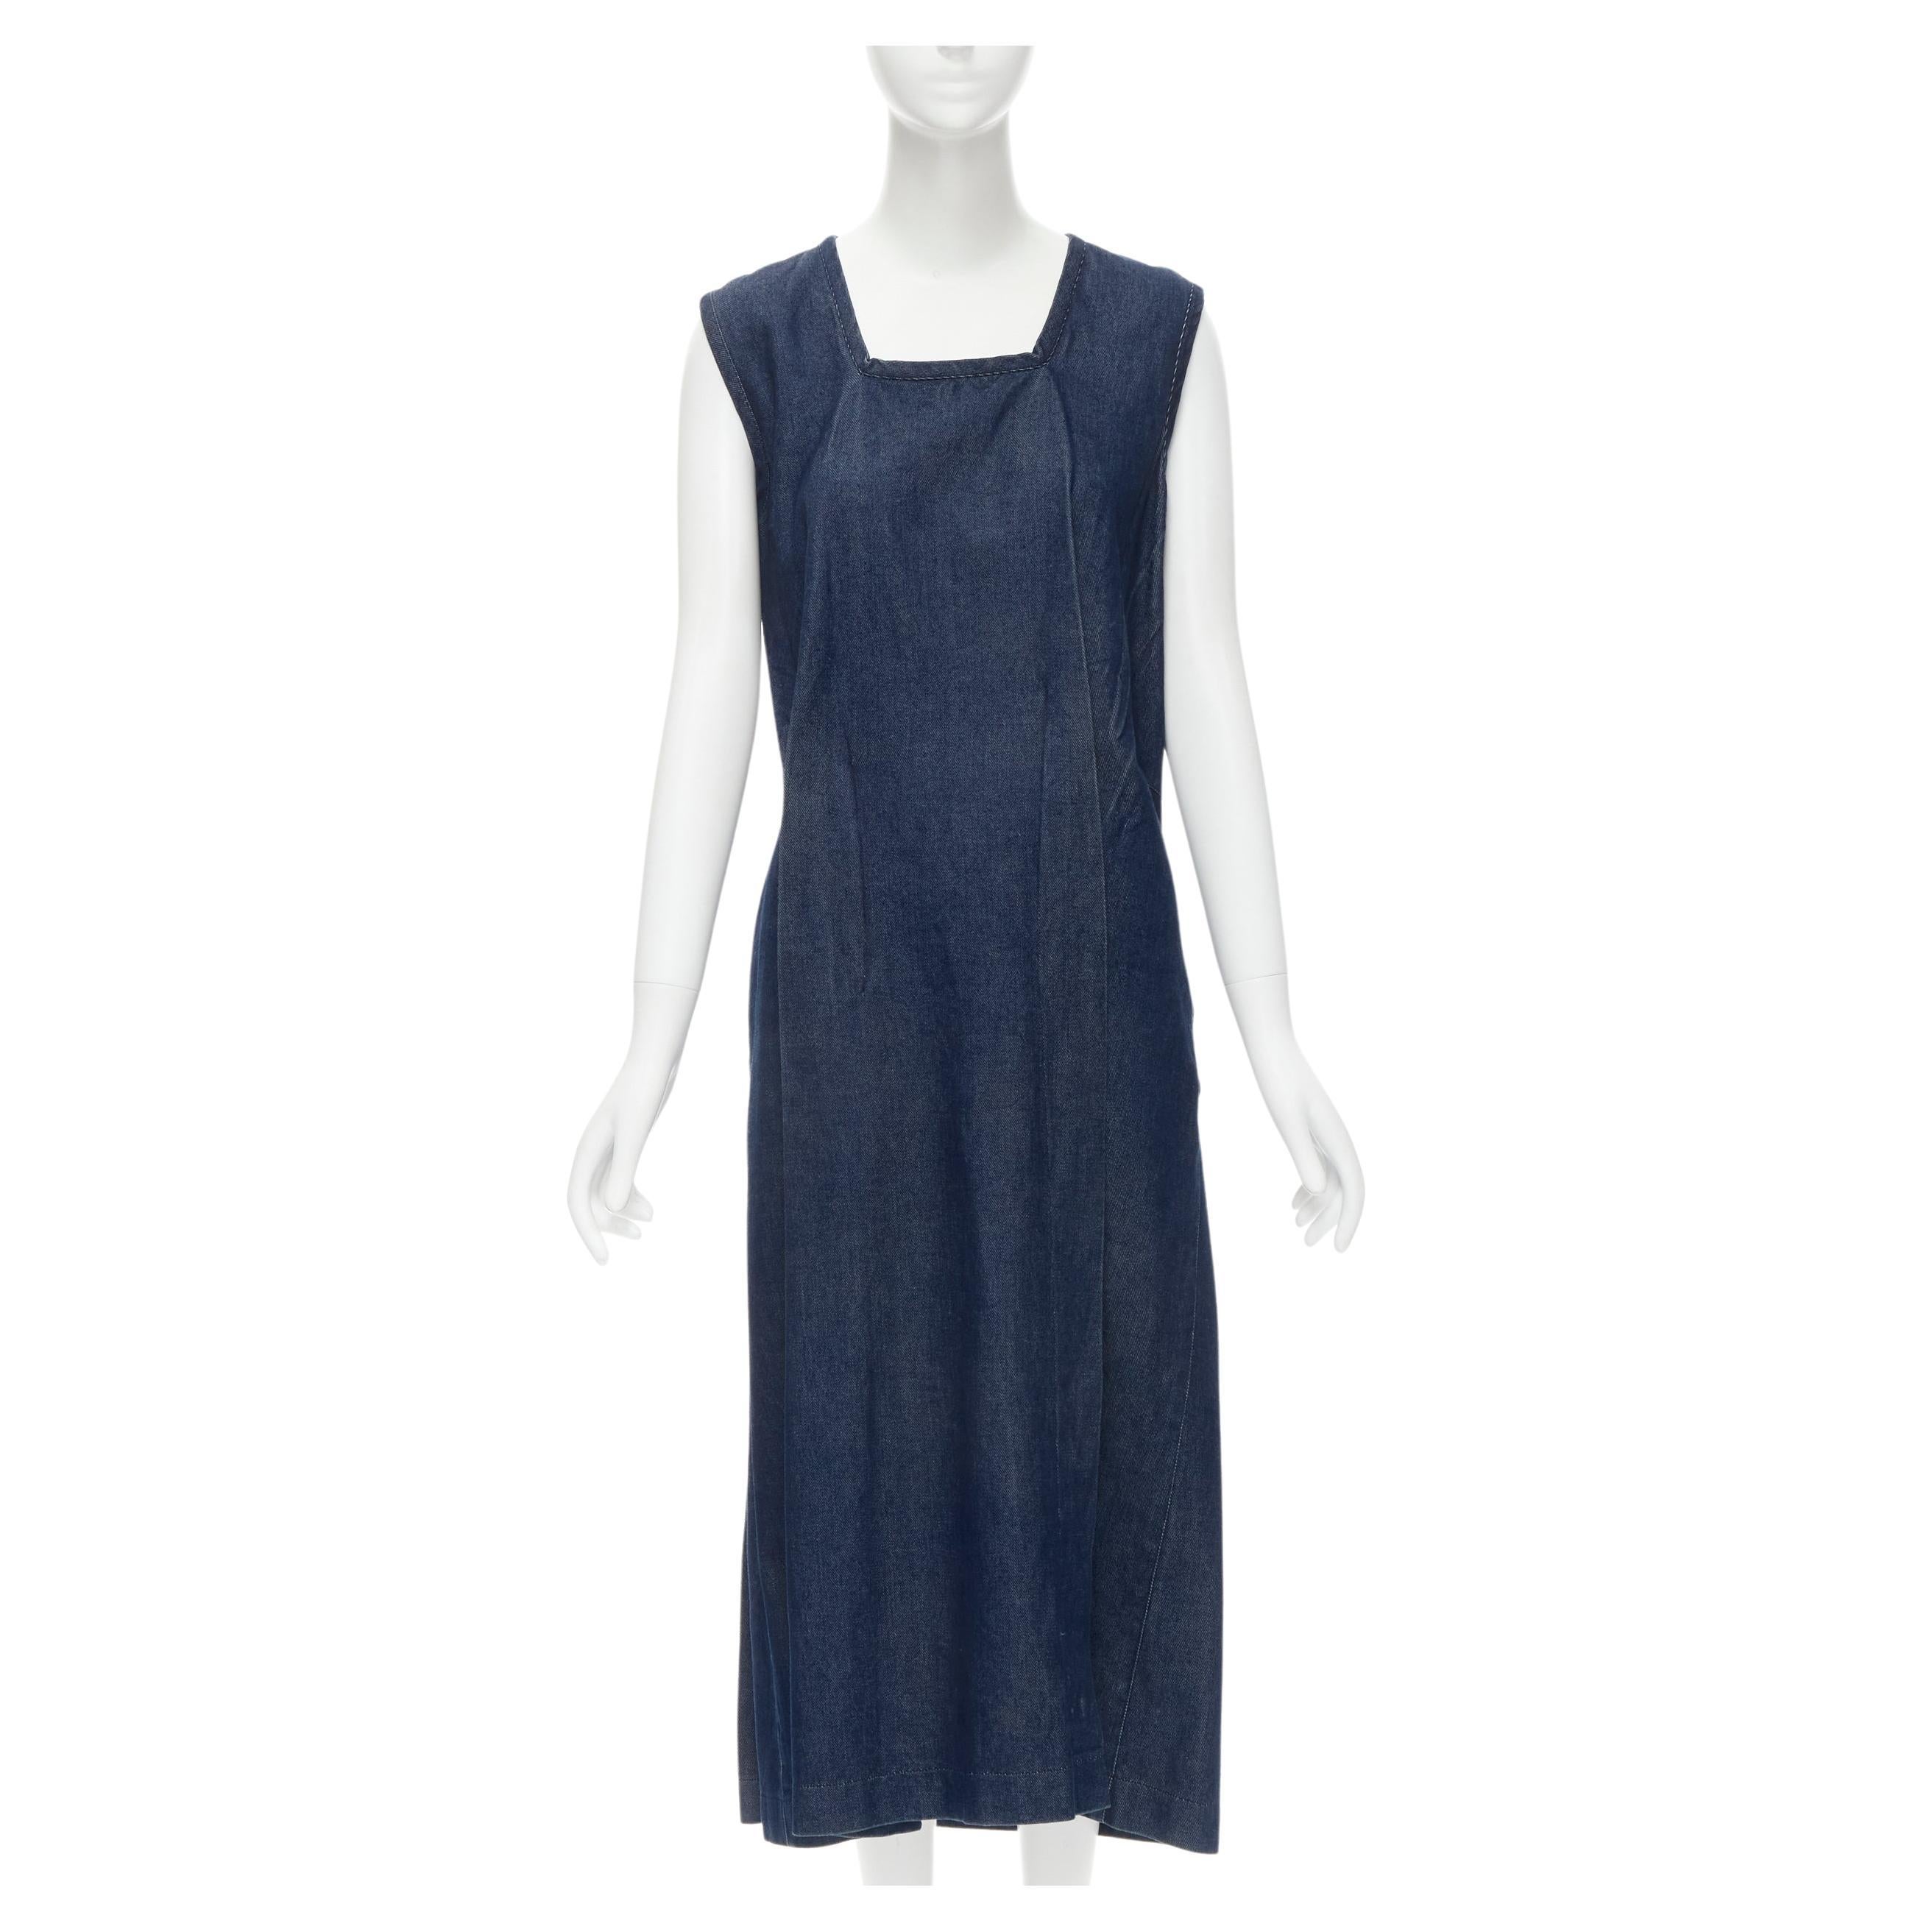 COMME DES GARCONS Vintage 1991 indigo blue denim pinched seam dress M